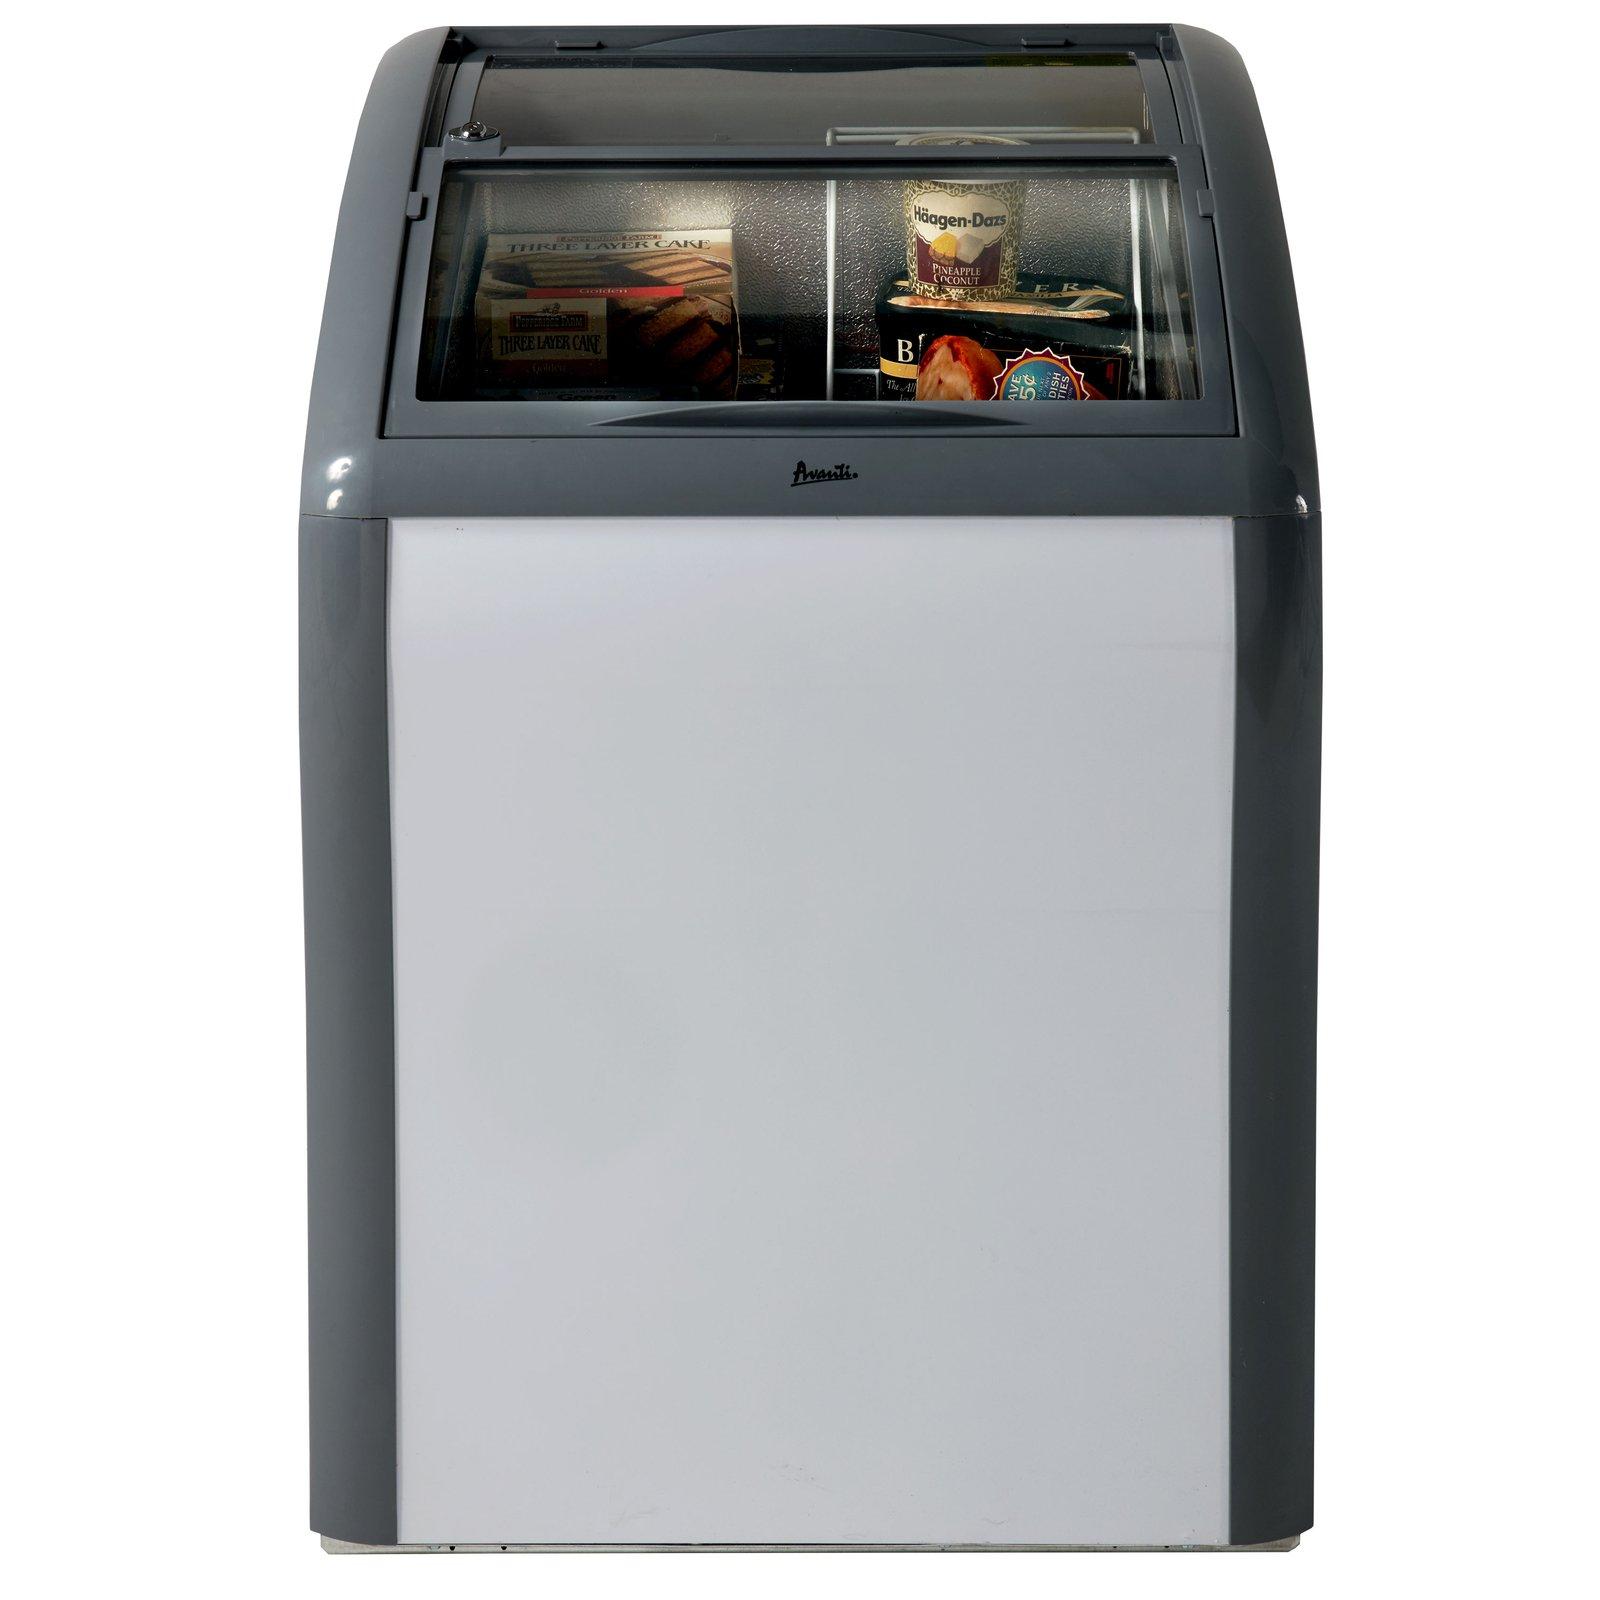 Avanti 4.2 cu. ft. Commercial Sliding Glass Top Freezer or Refrigerator - White / 4.2 cu. ft.